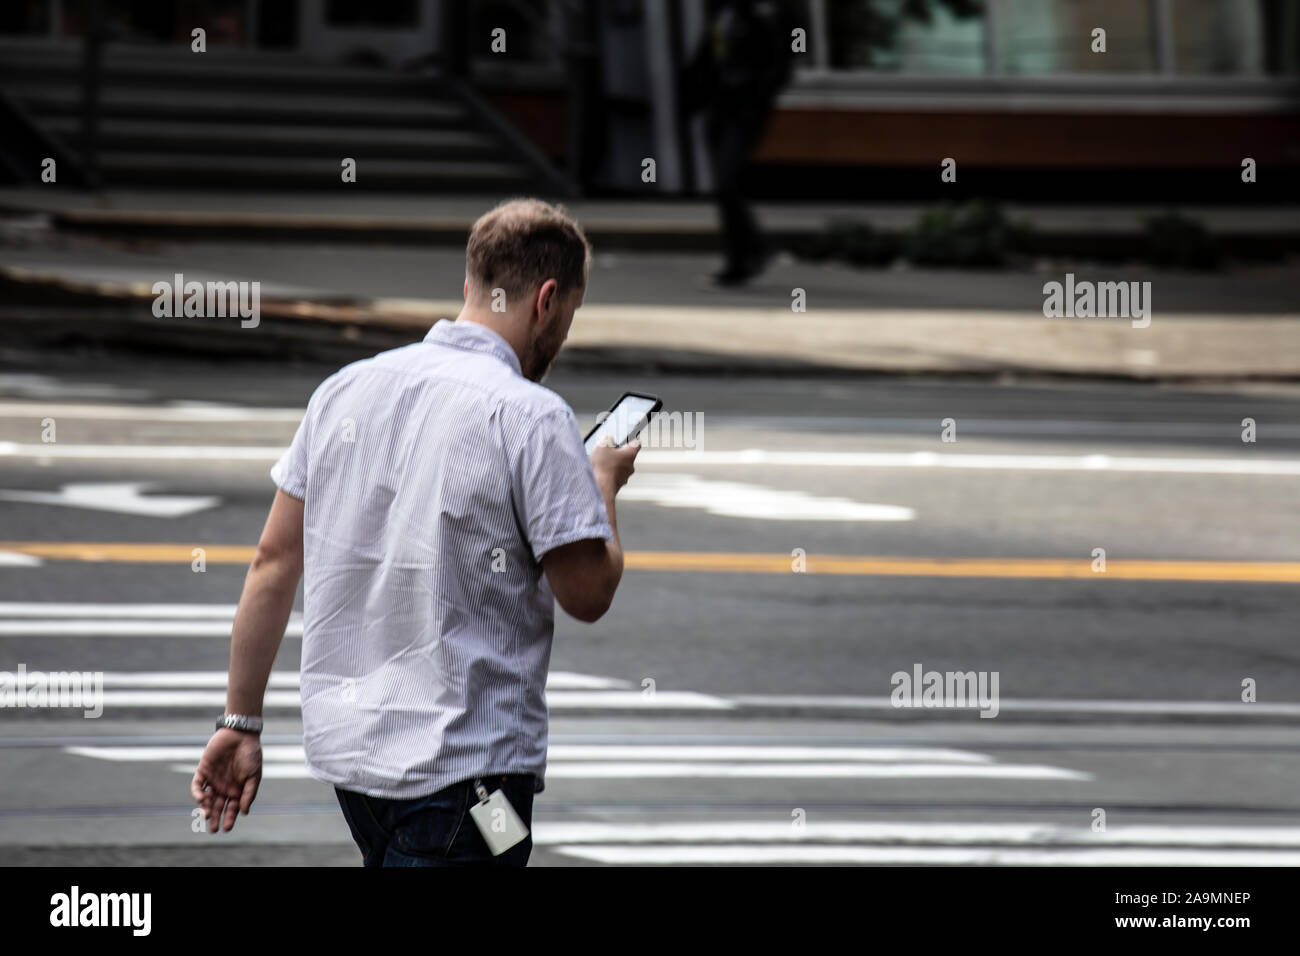 WA17340-00...WASHINGTON - Man walking in Seattle while looking at his cell phone. Stock Photo